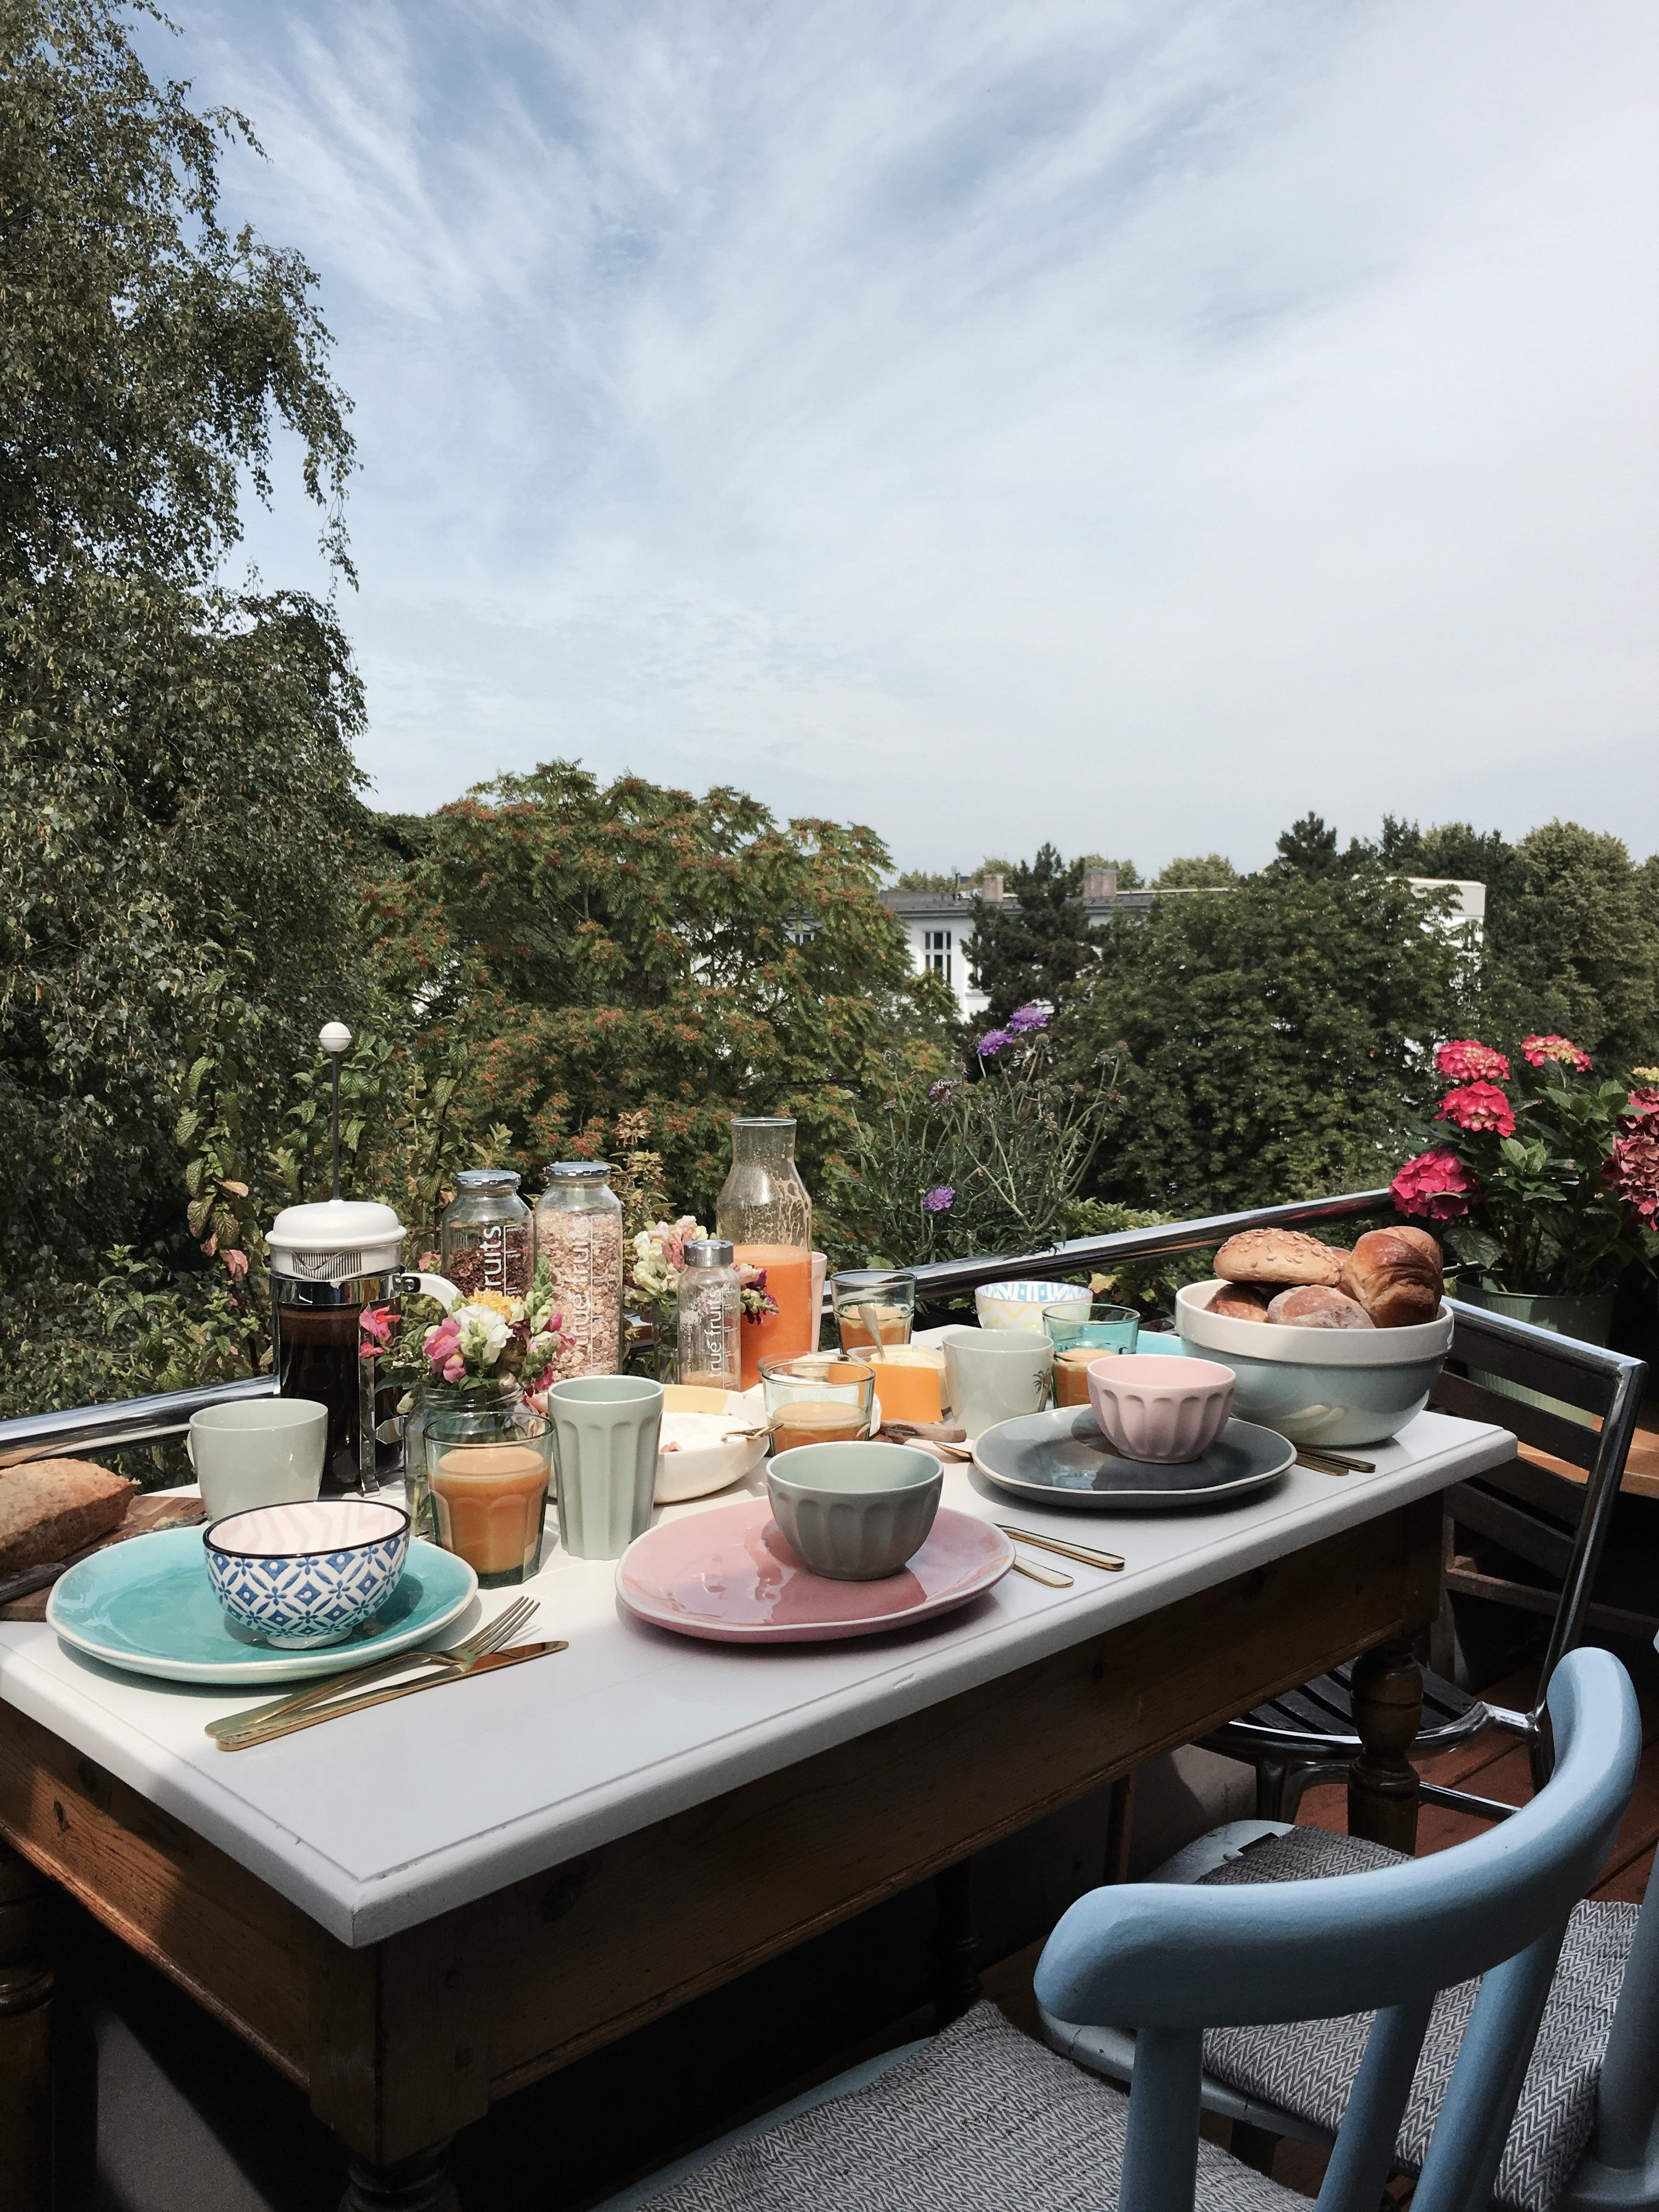 Balkon 🌸🌞🥐
#breakfast #balkon #couchmagazin